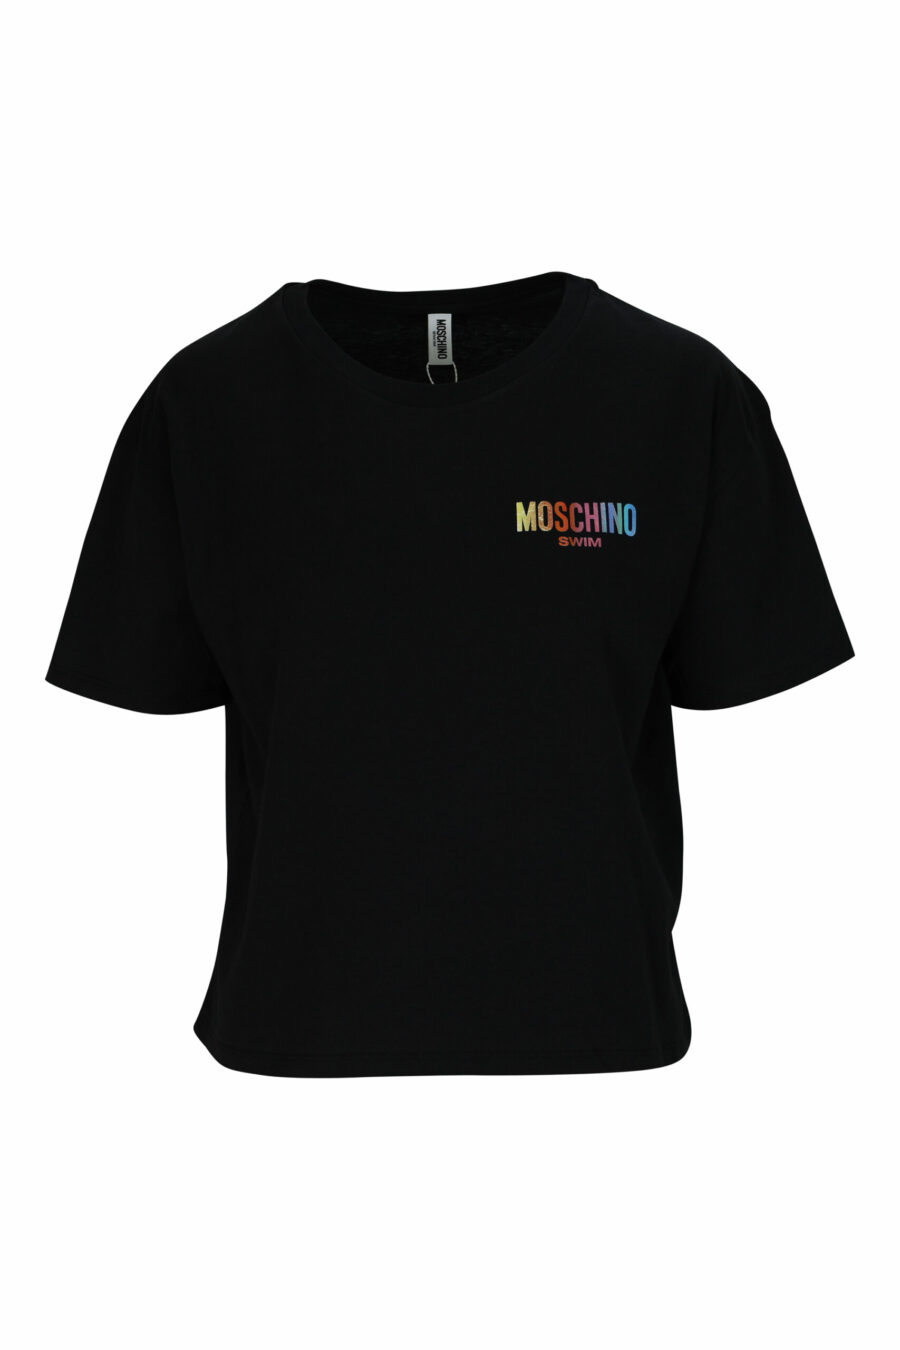 T-shirt preta de grandes dimensões com mini-logotipo multicolorido - 667113355894 scaled